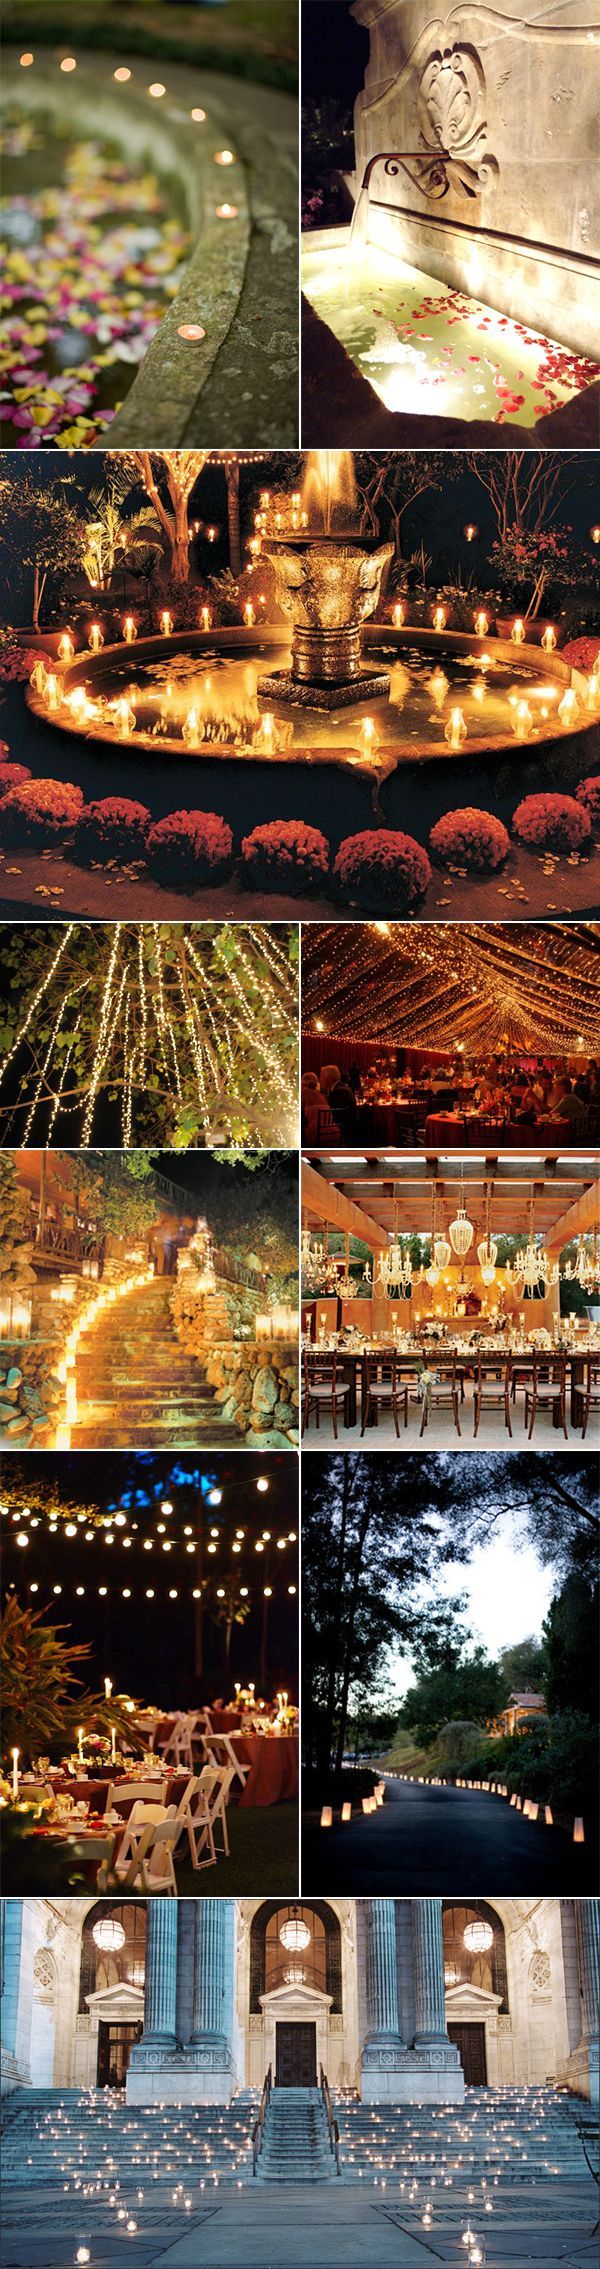 Outdoor Wedding Lighting | Lighting For Your Outdoor Wedding Reception Venue | P